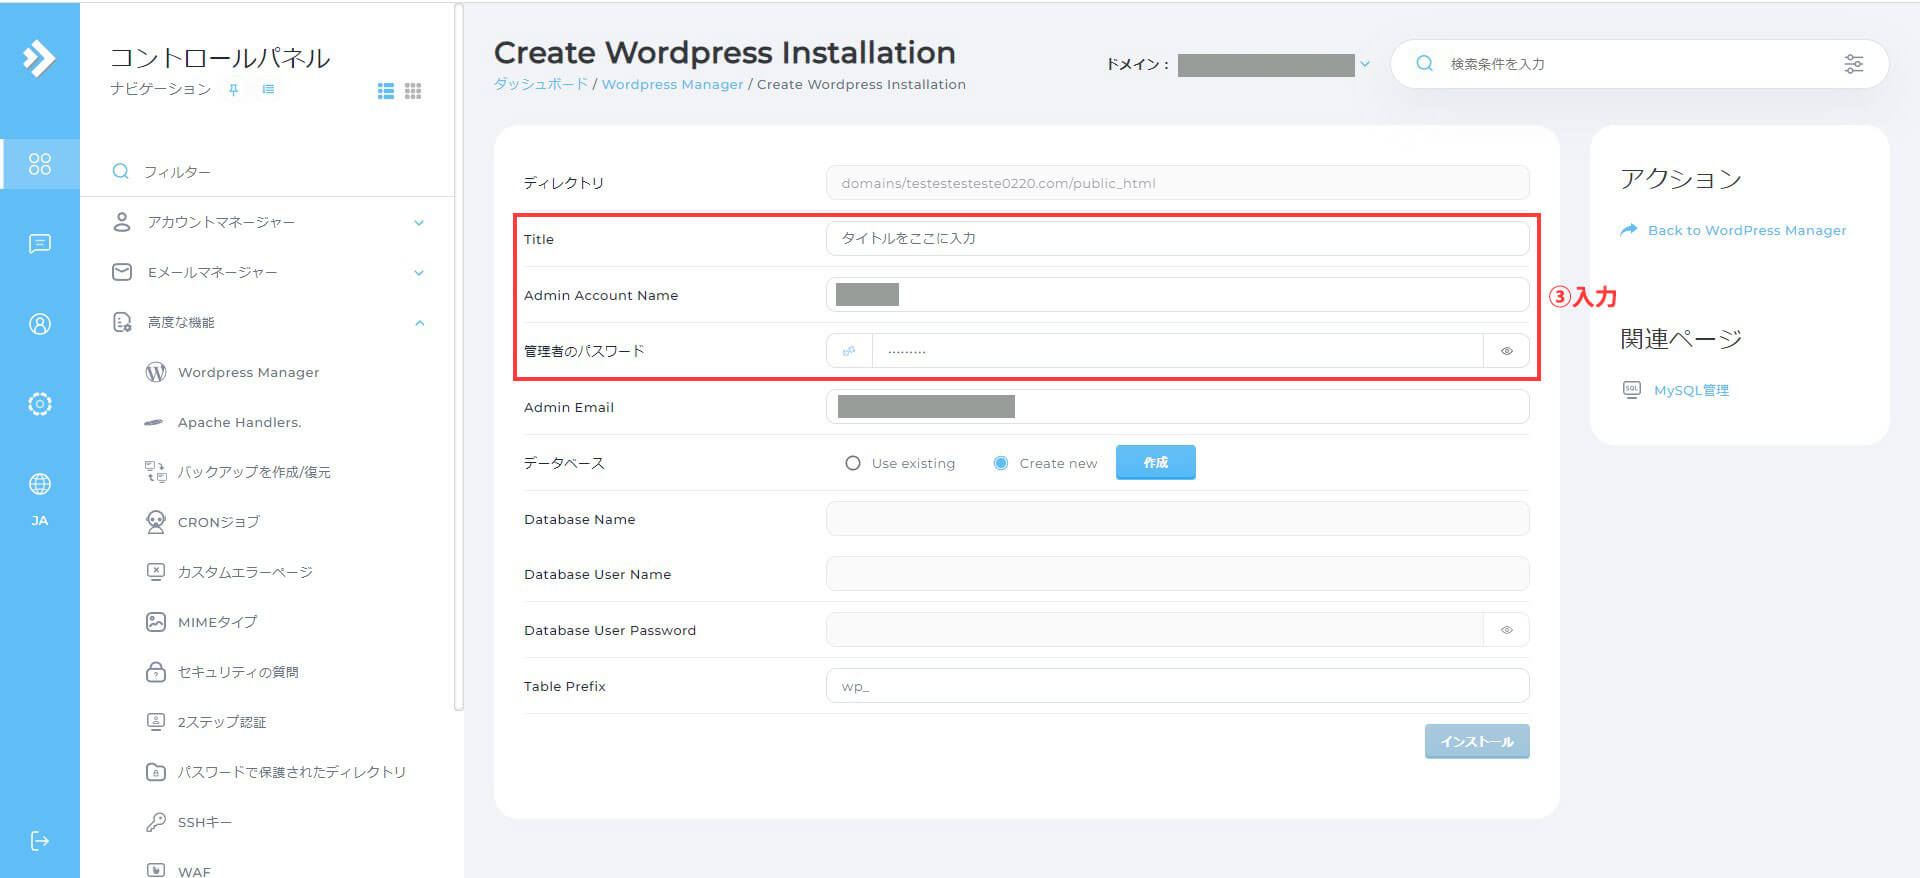 Create WordPress Installation画面